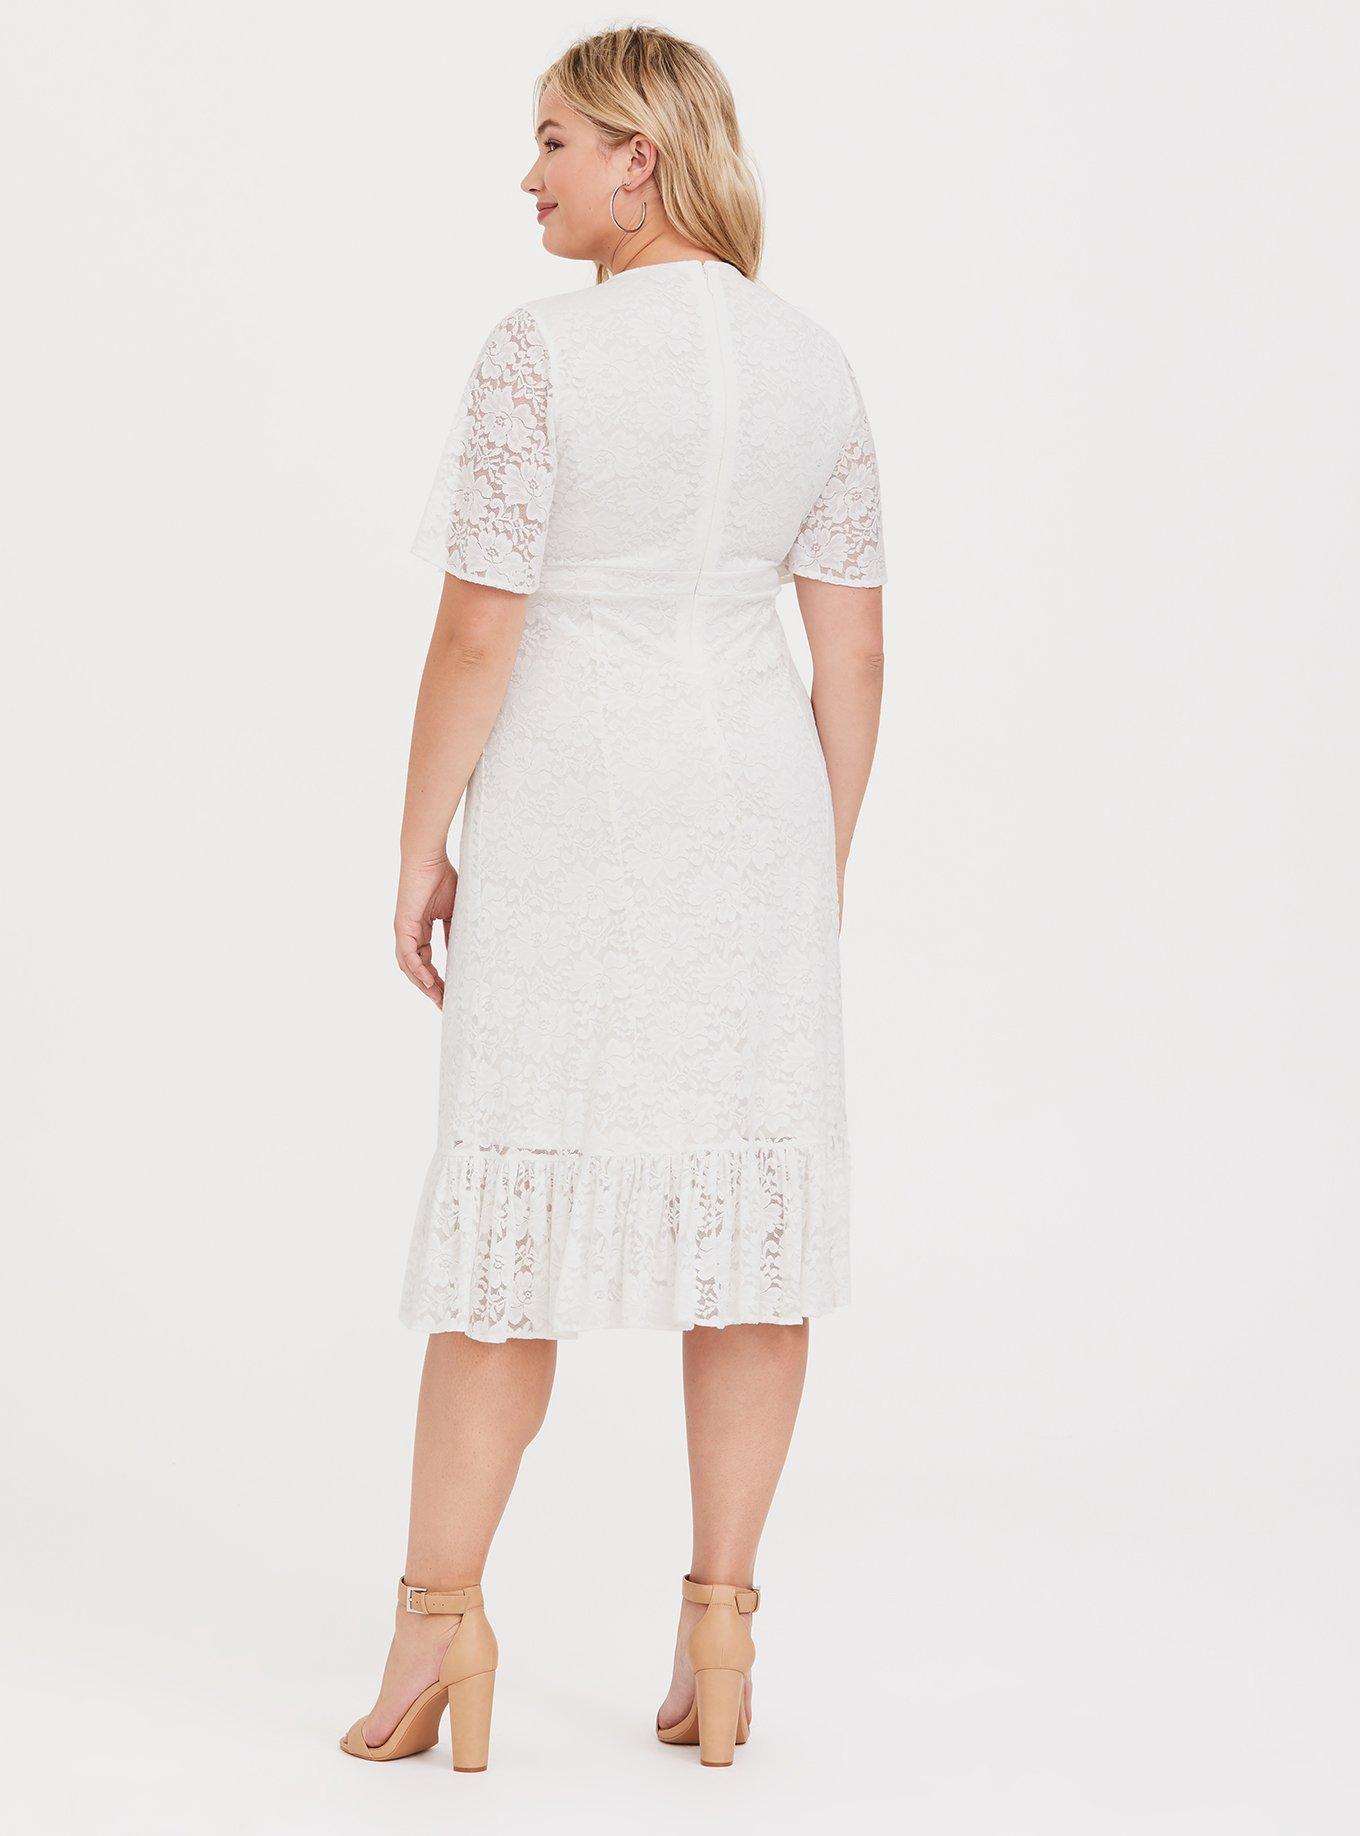 Plus Size - White Lace Midi Dress - Torrid